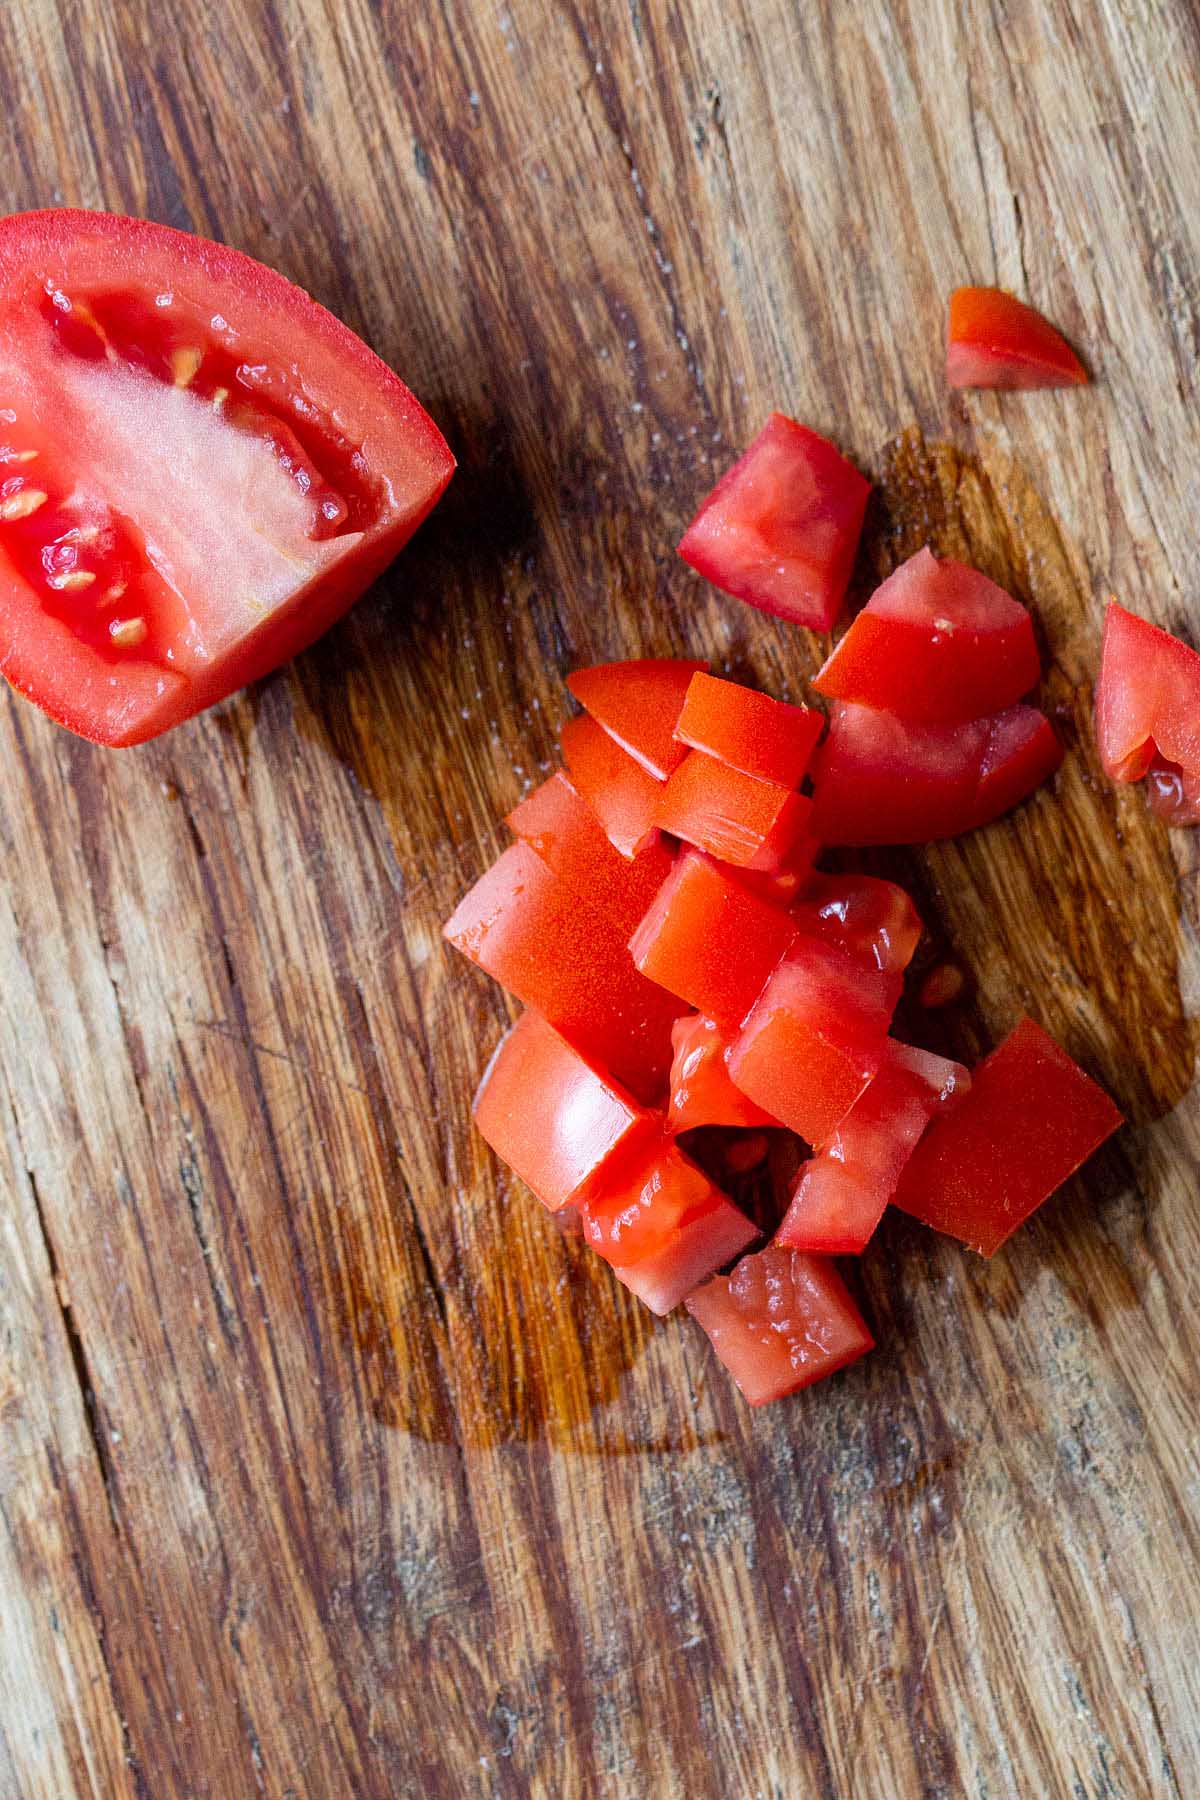 Slicing a roma tomato.